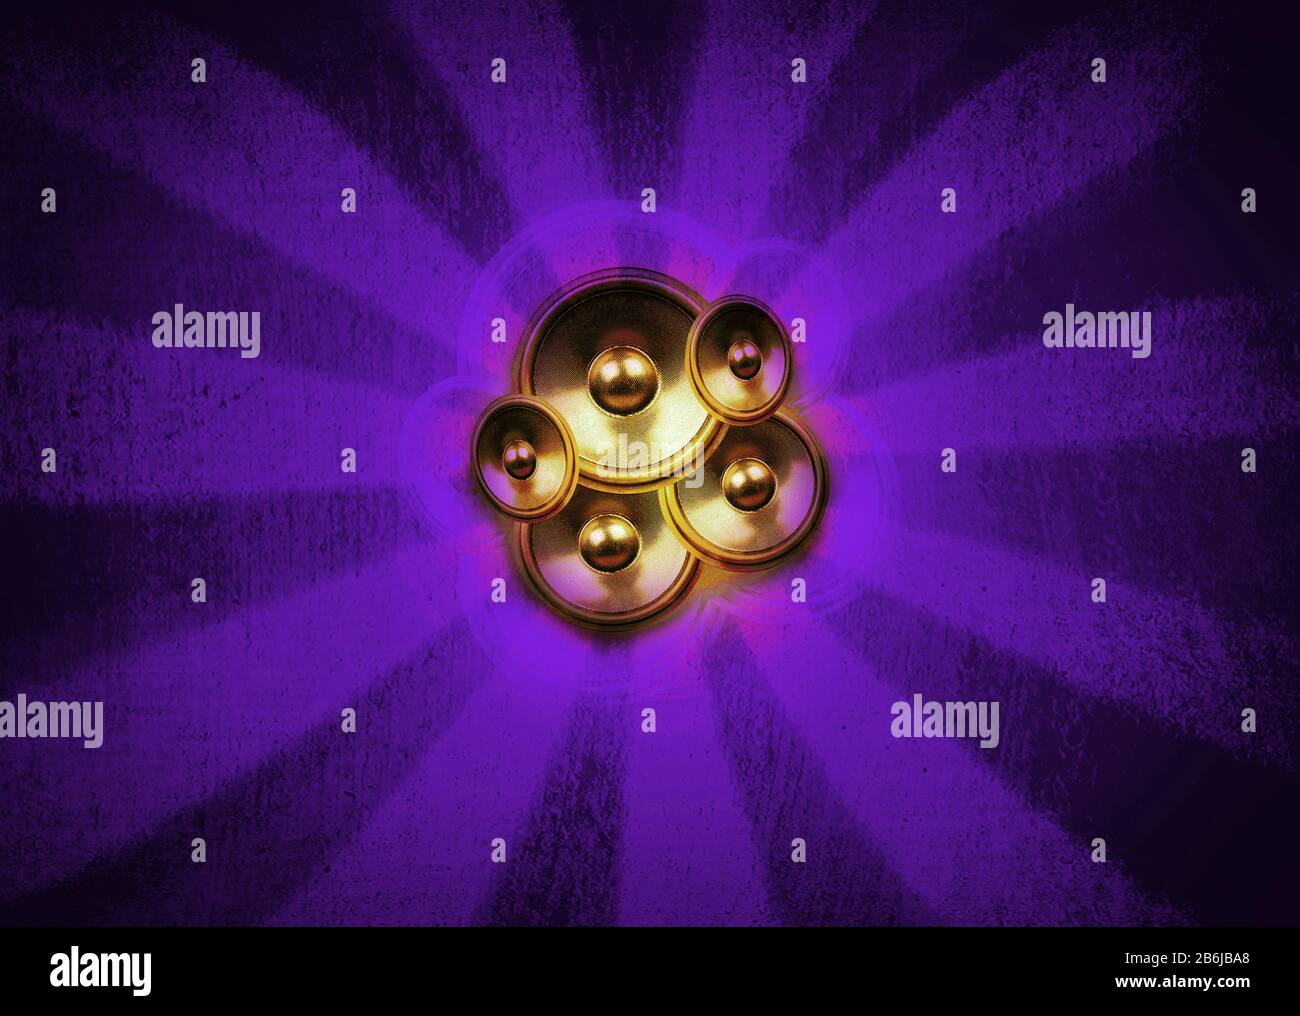 Audio speakers on a purple sunburst background with vignette Stock Photo